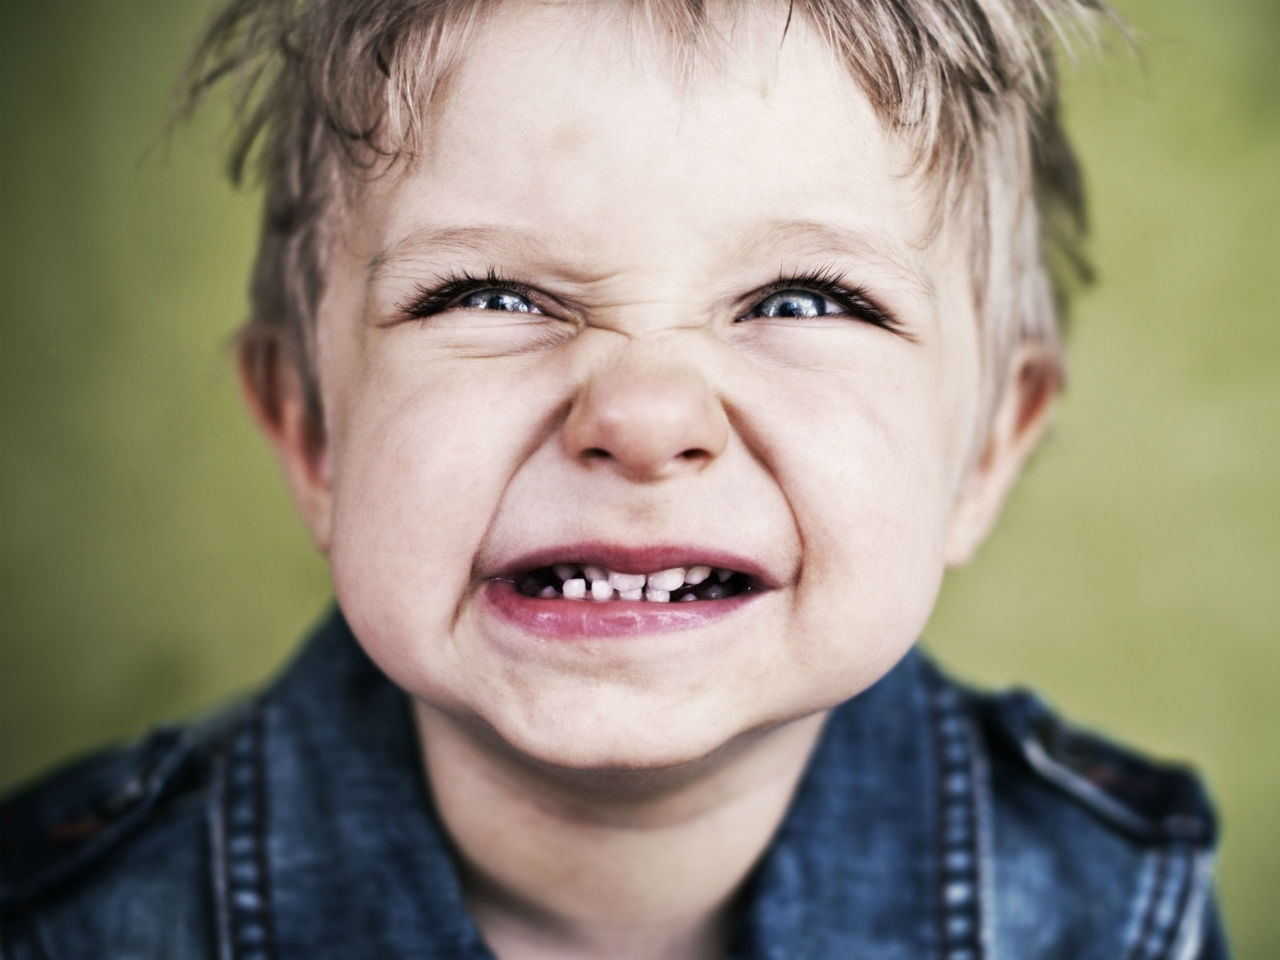 How to handle teeth grinding in toddlers